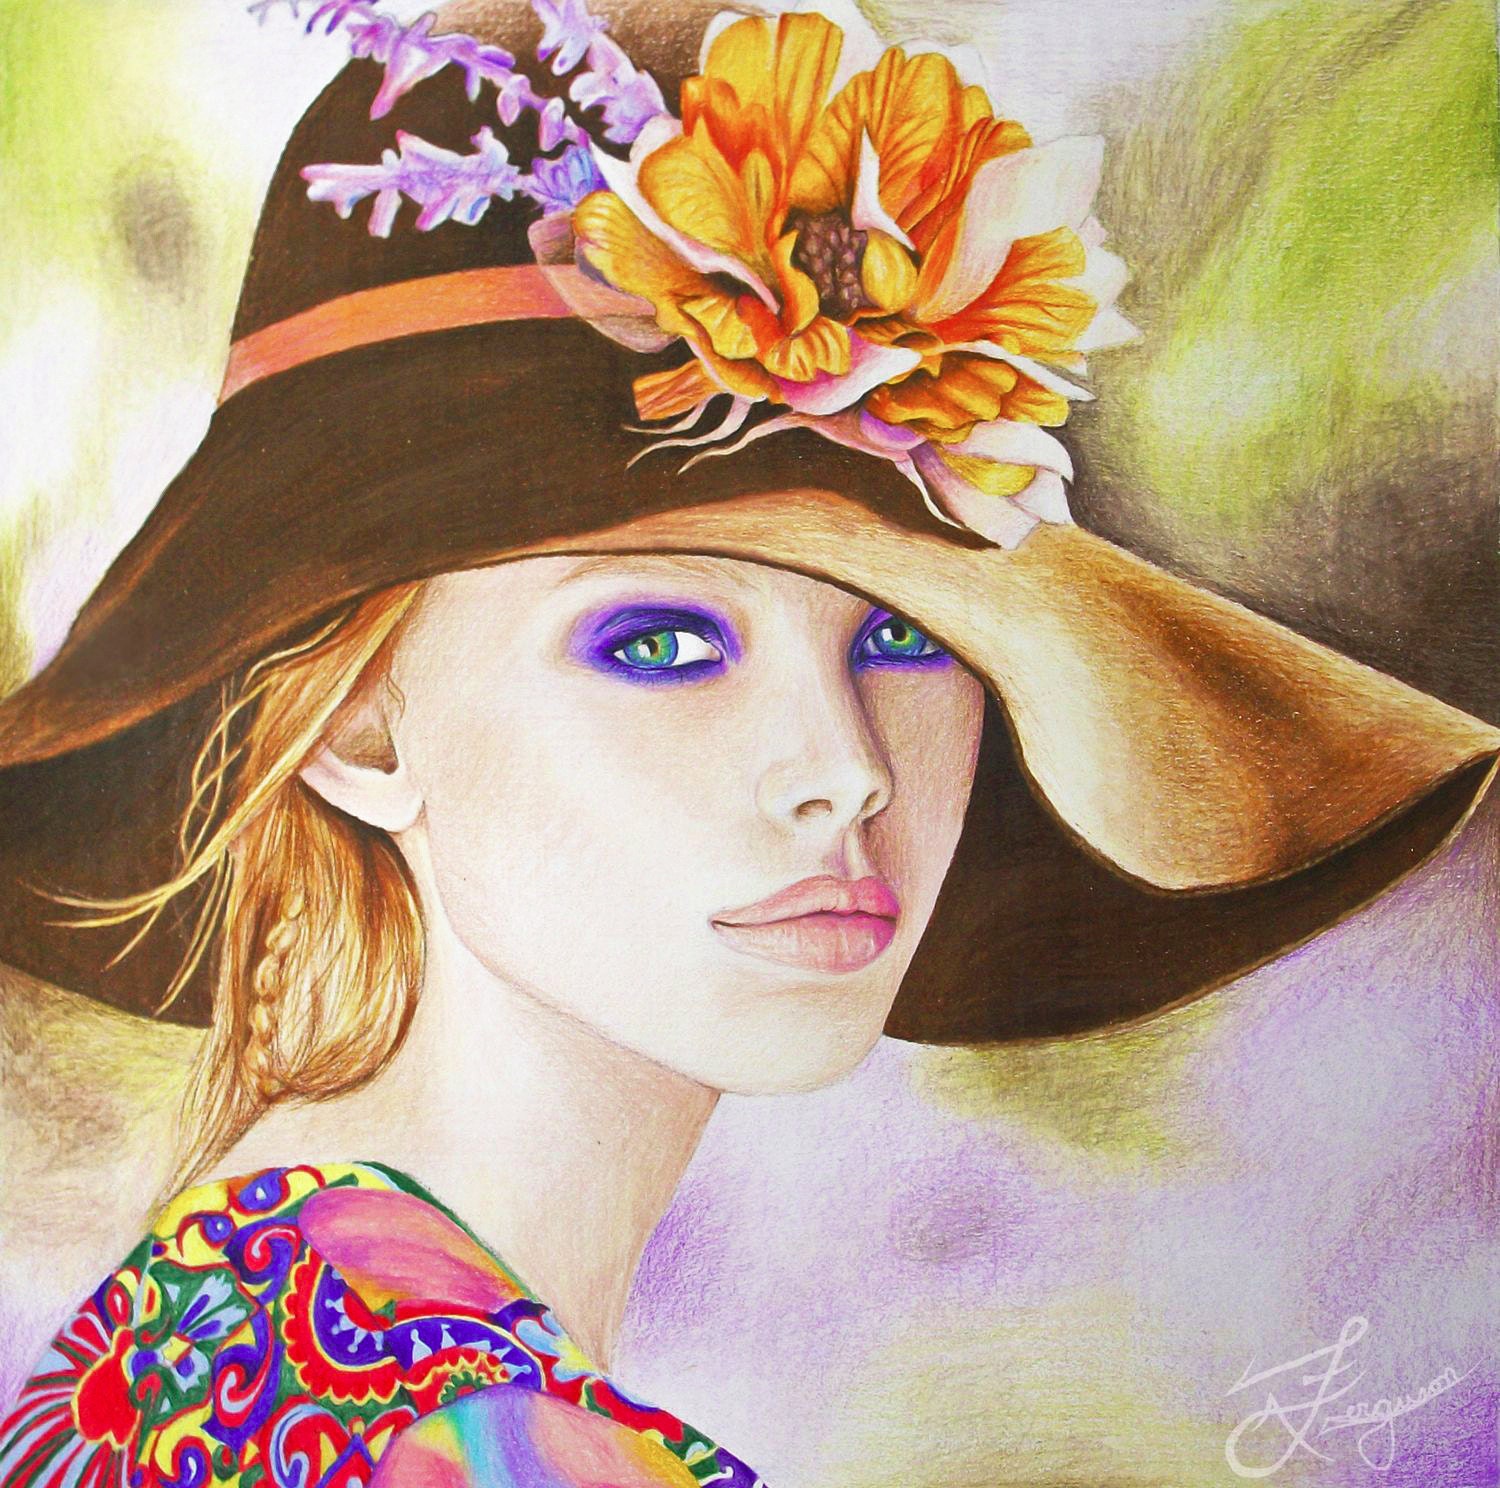 Renewal - Original Art giclee print - boho chic, spring, artwork, home decor - Lady in hat, poppy, colorful - LainyArt